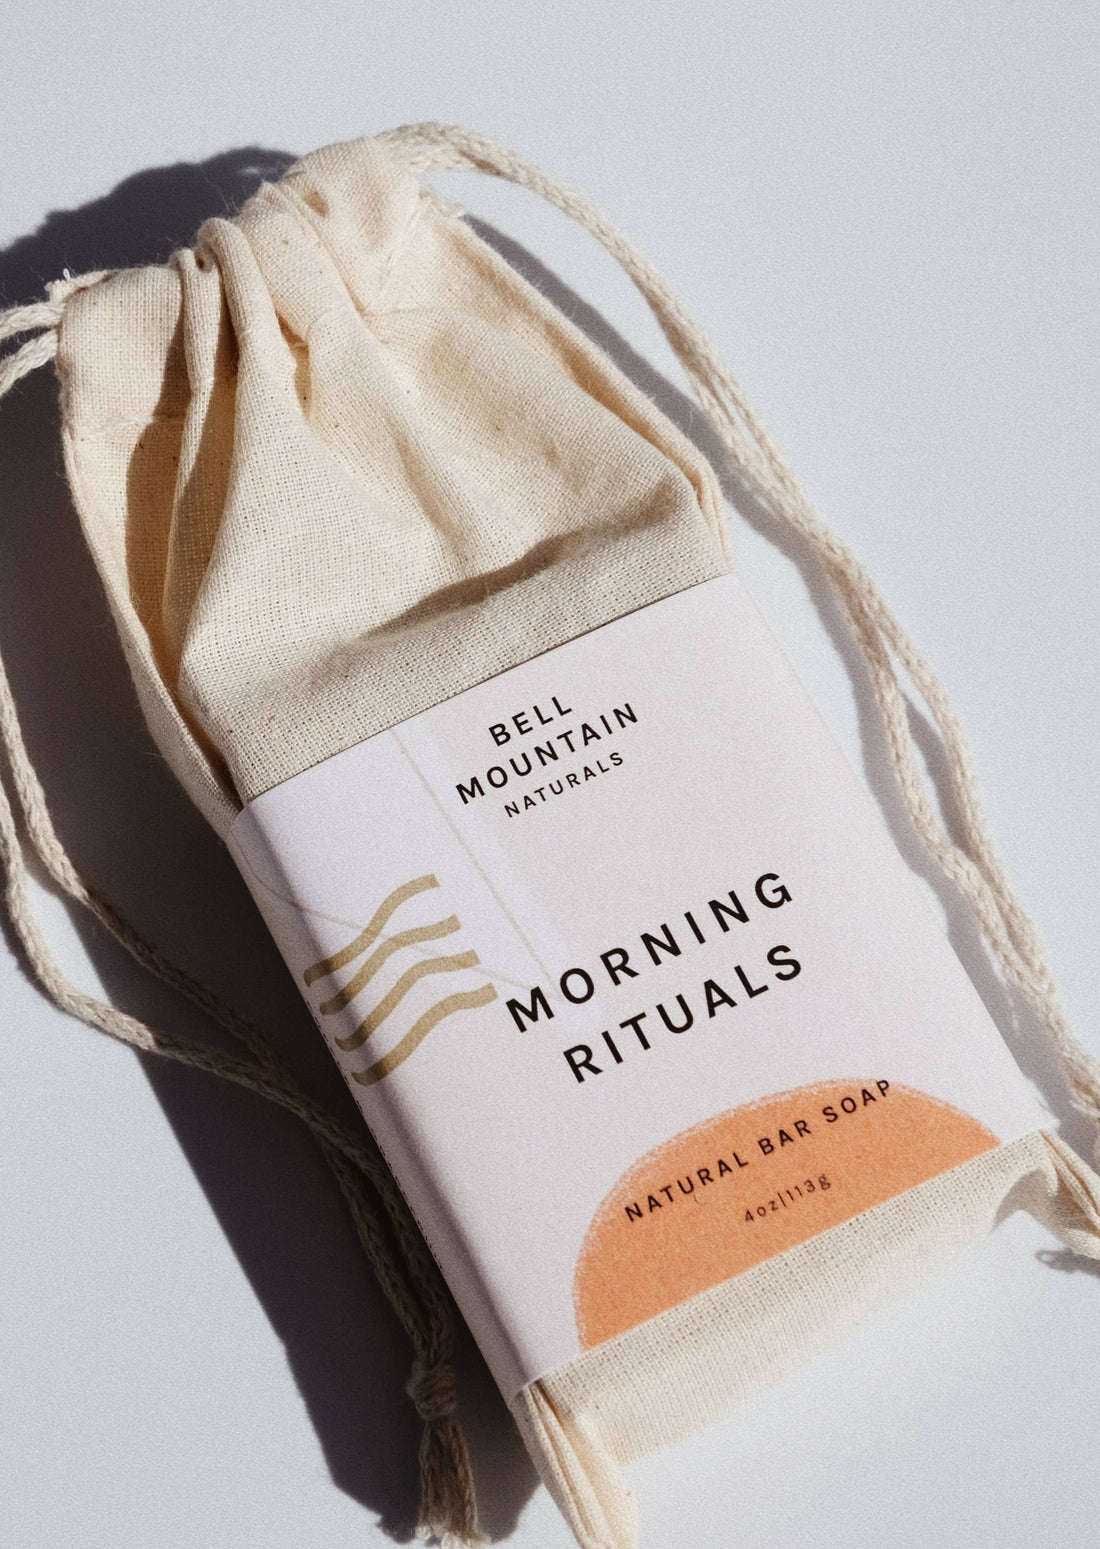 Bag of Morning Rituals Natural Bar Soap